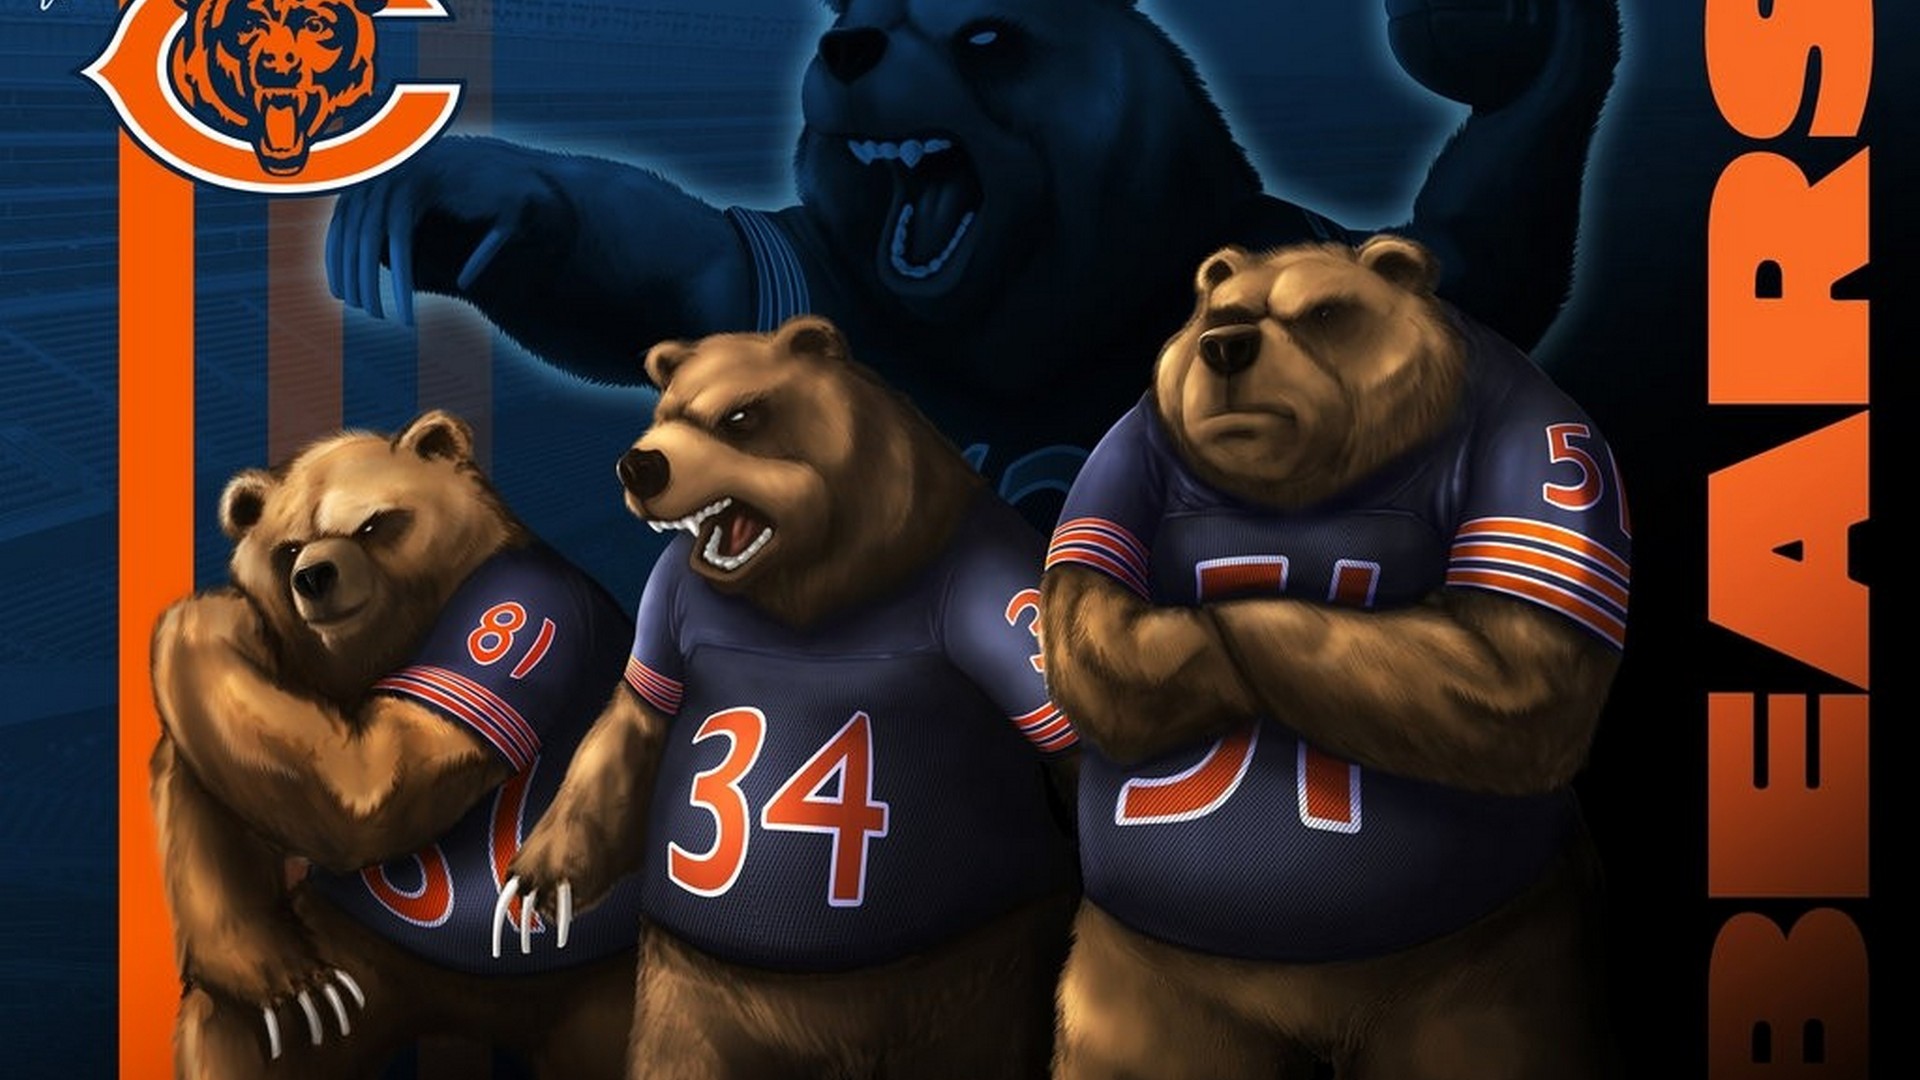 Hd Backgrounds Chicago Bears - Chicago Bears Wallpaper 2018 - HD Wallpaper 